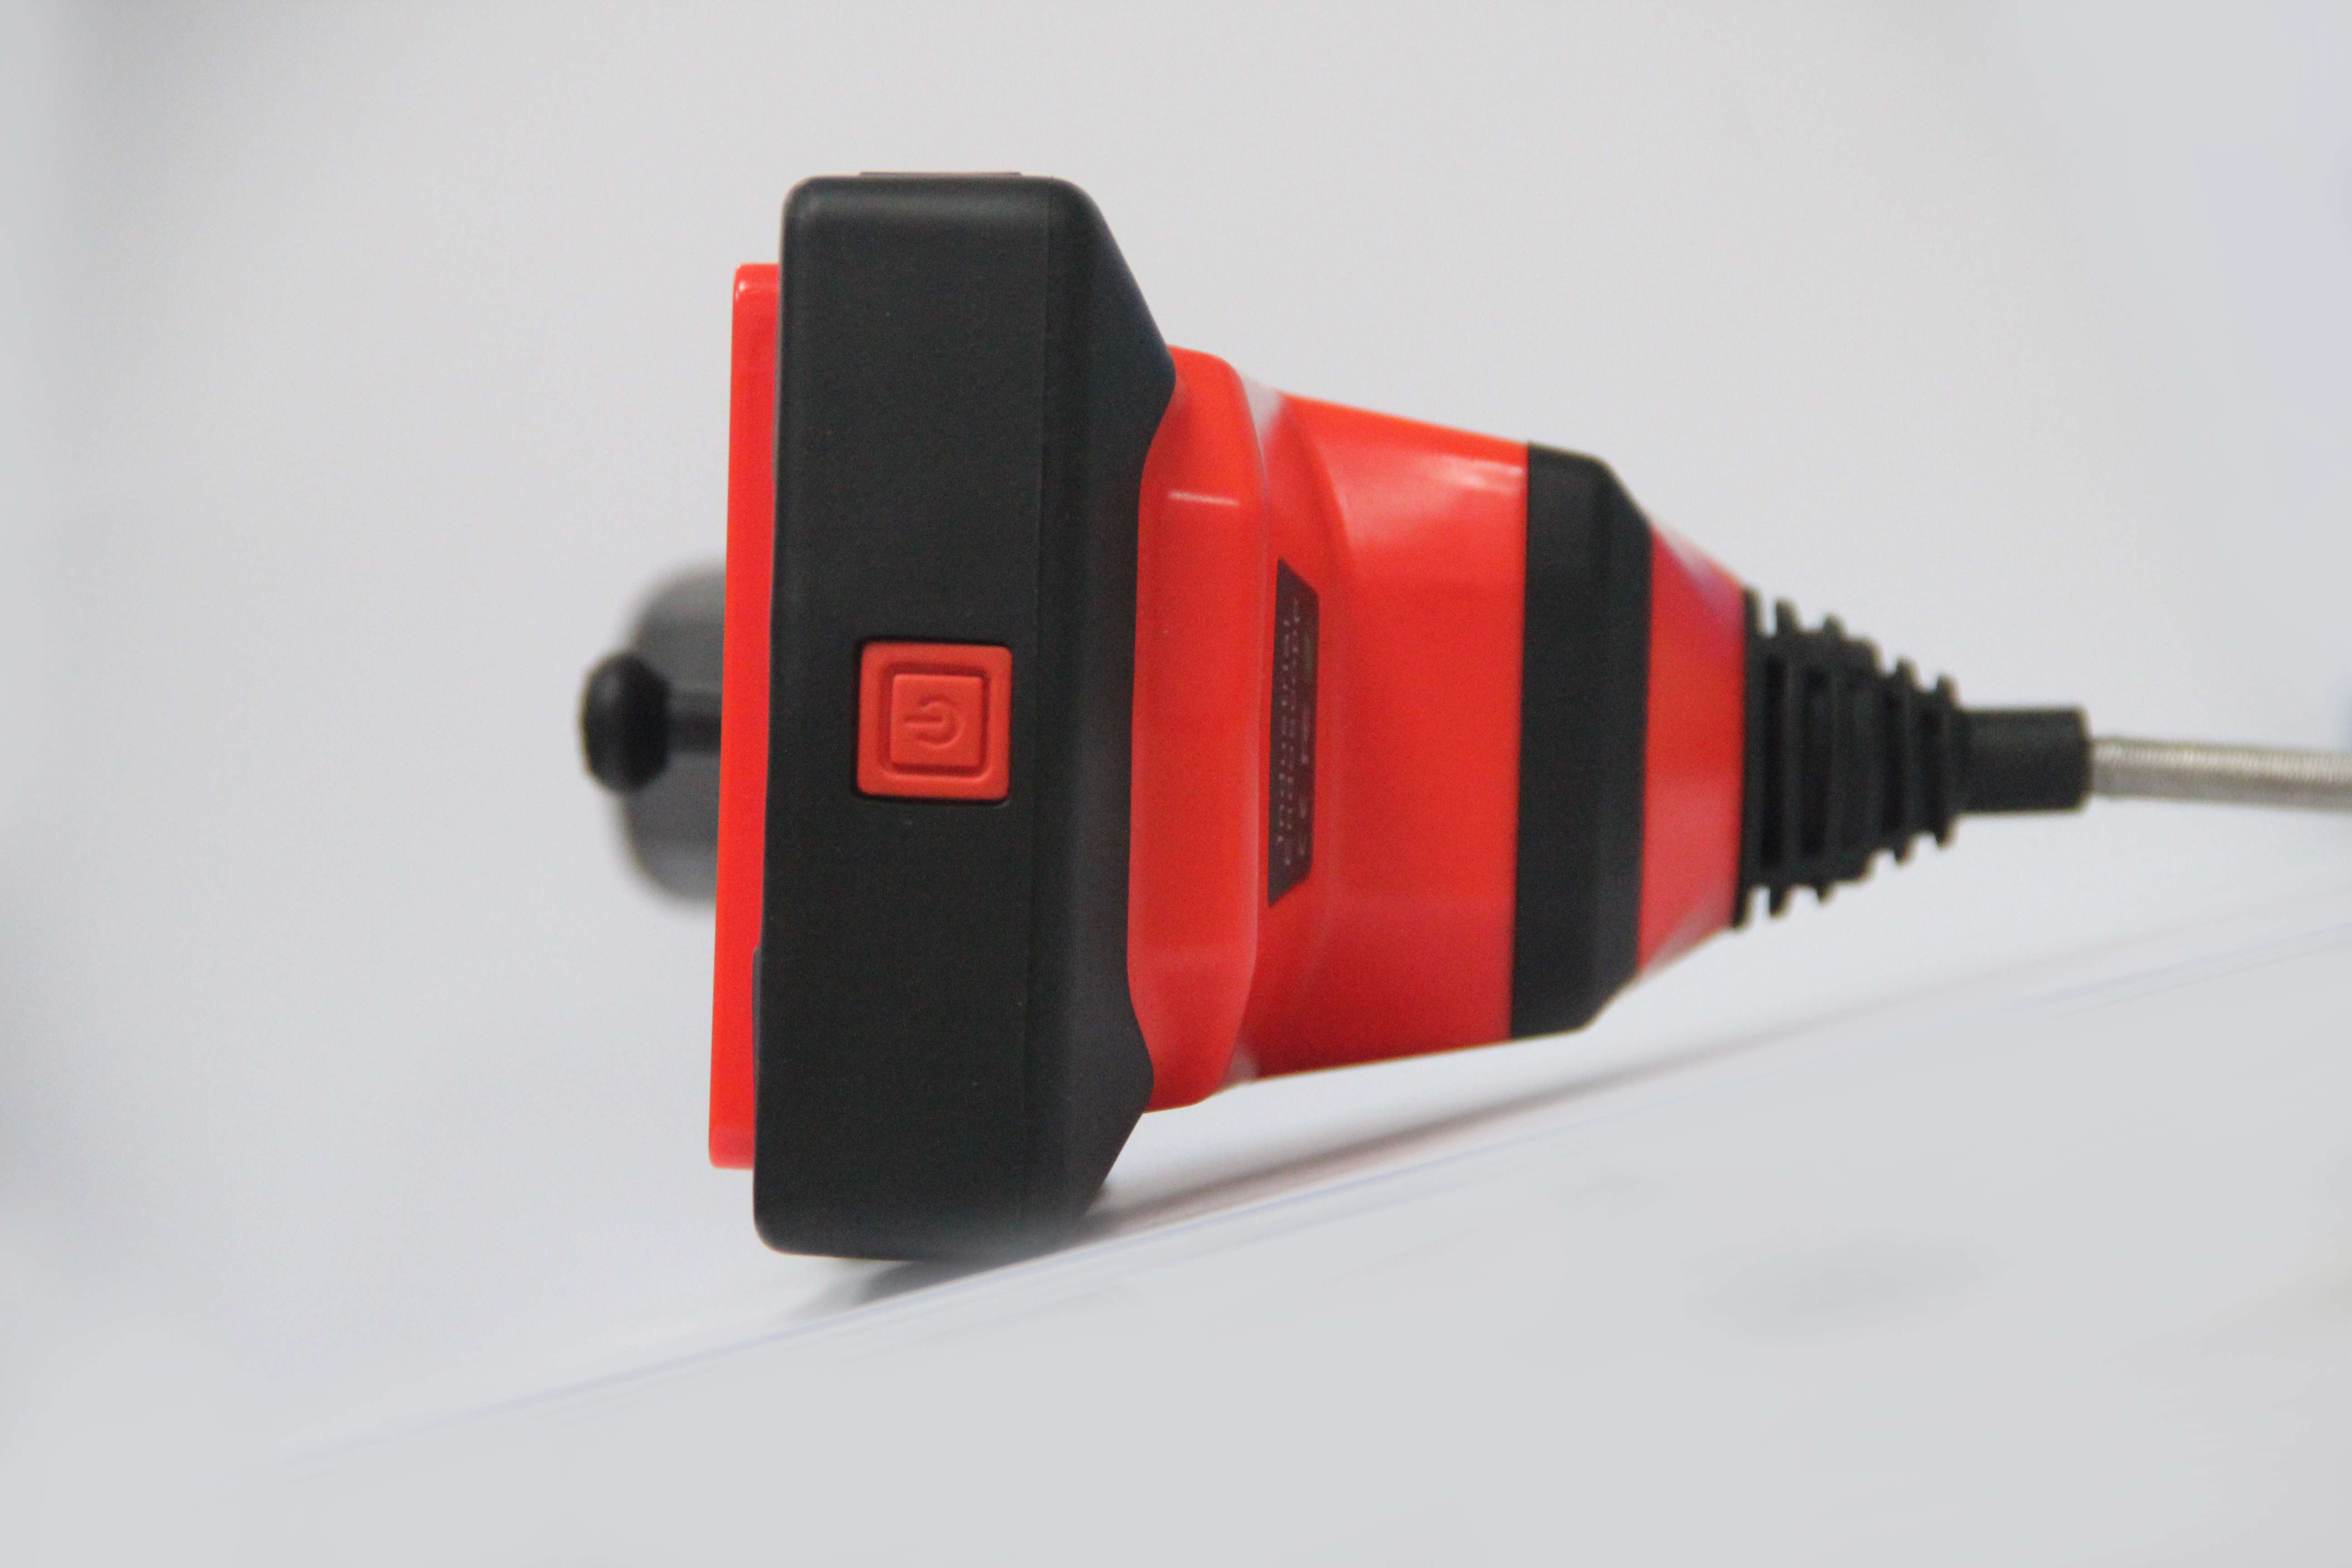 6mm probe industry borescope